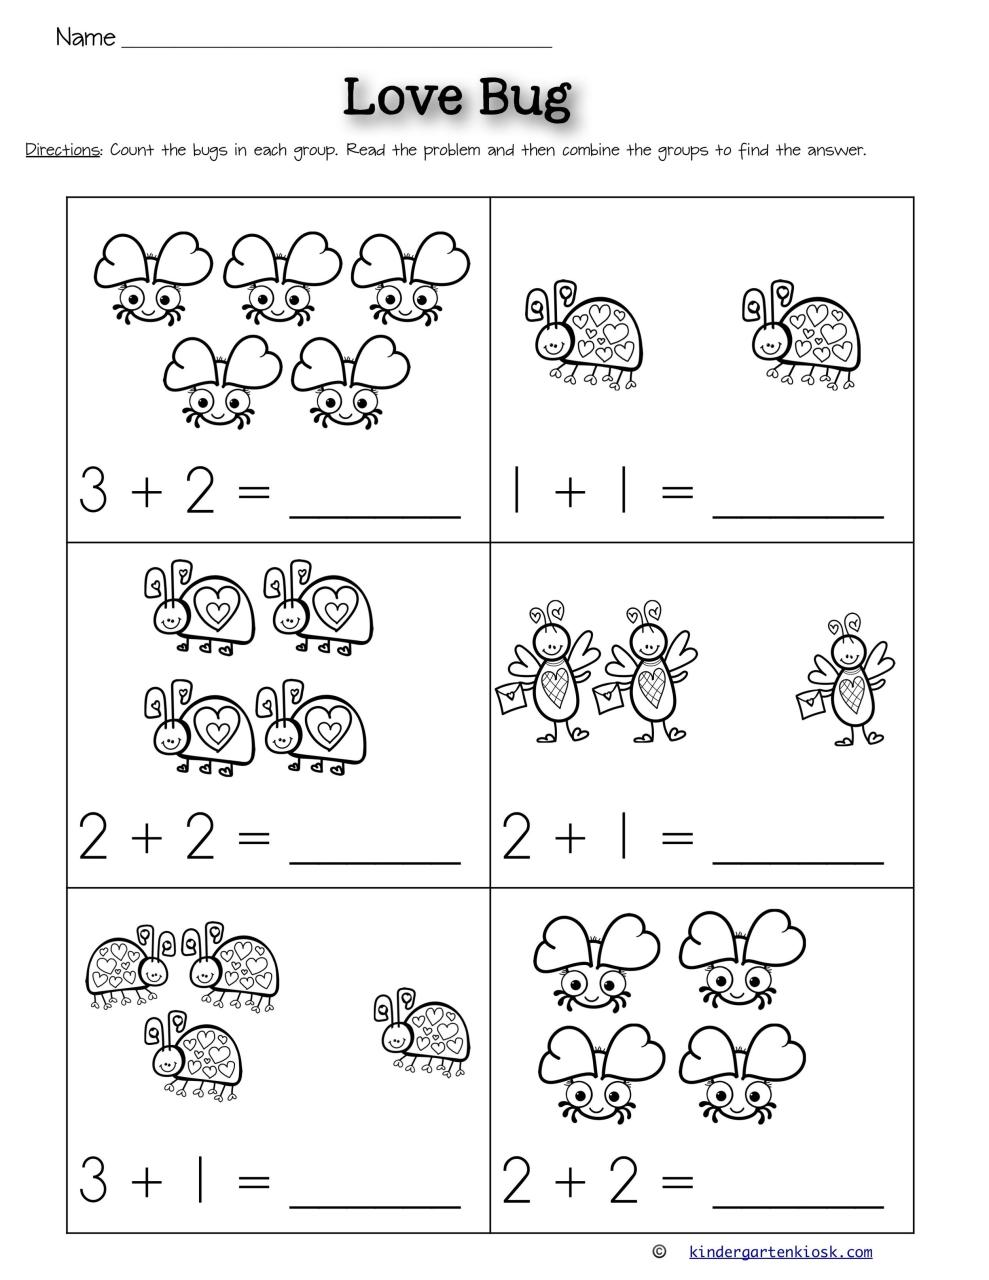 Addition 05 Worksheets February — Kindergarten Kiosk Math addition